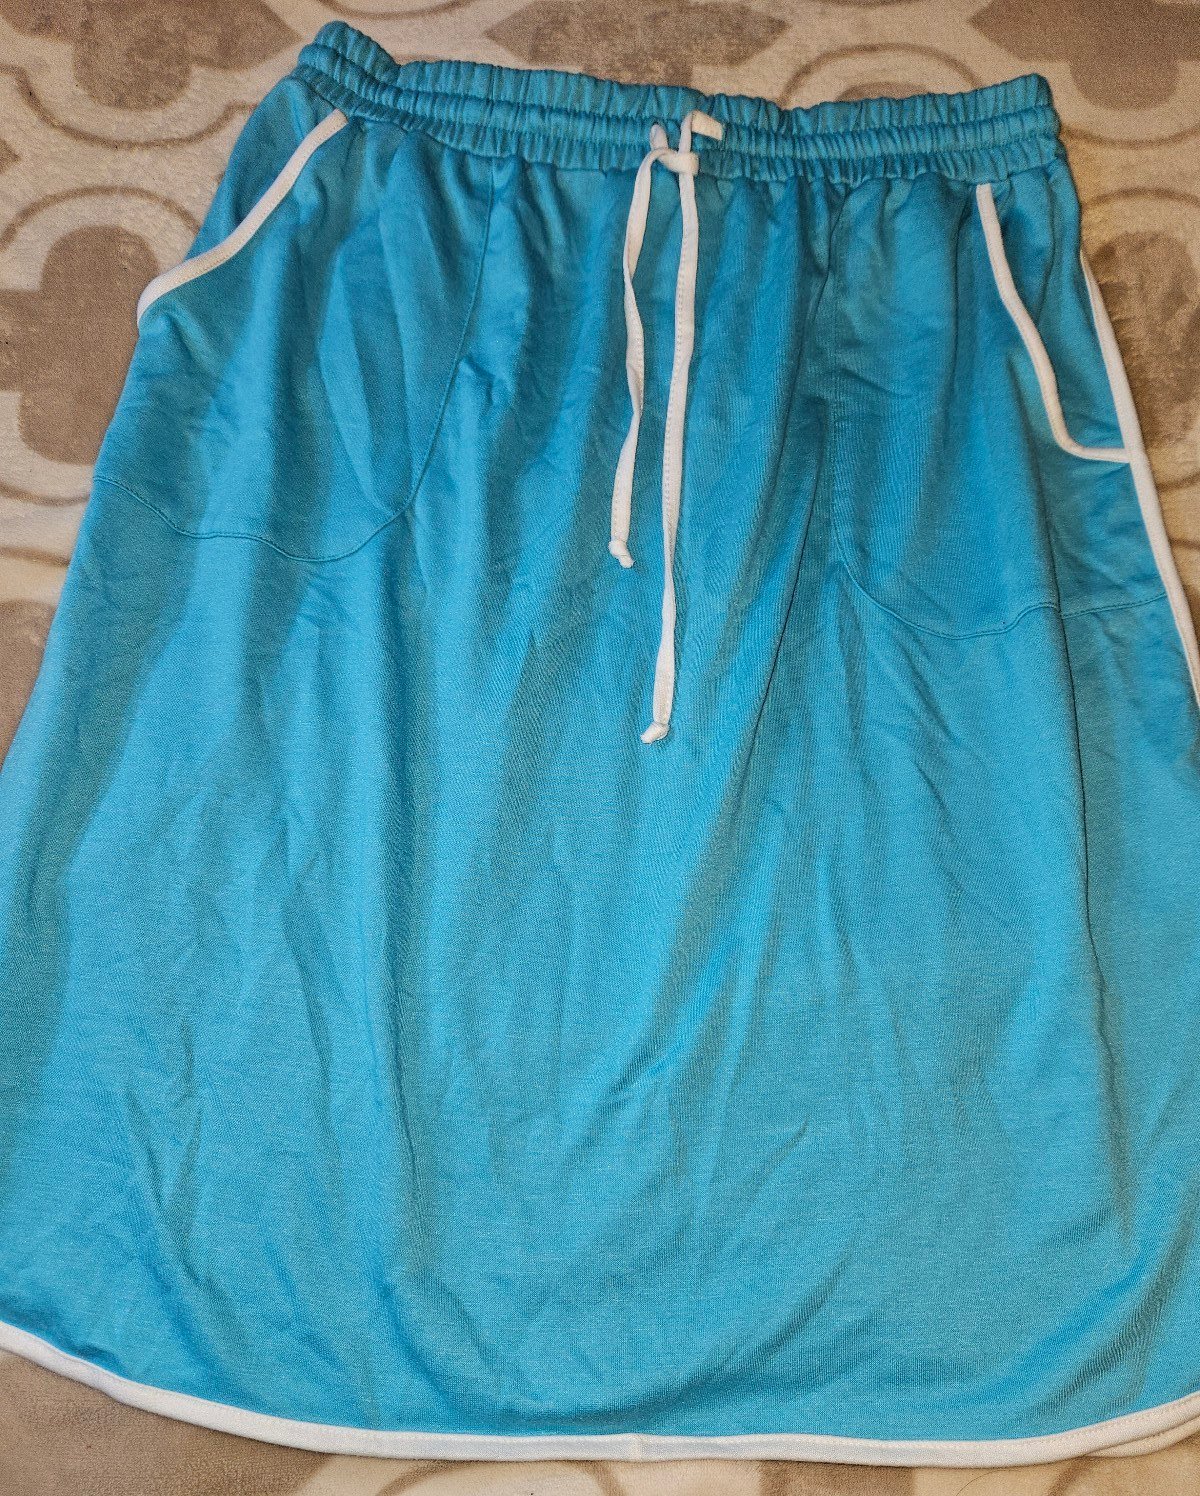 reasonable price Lularoe large lonicia blue skirt ijNxVps28 Hot Sale